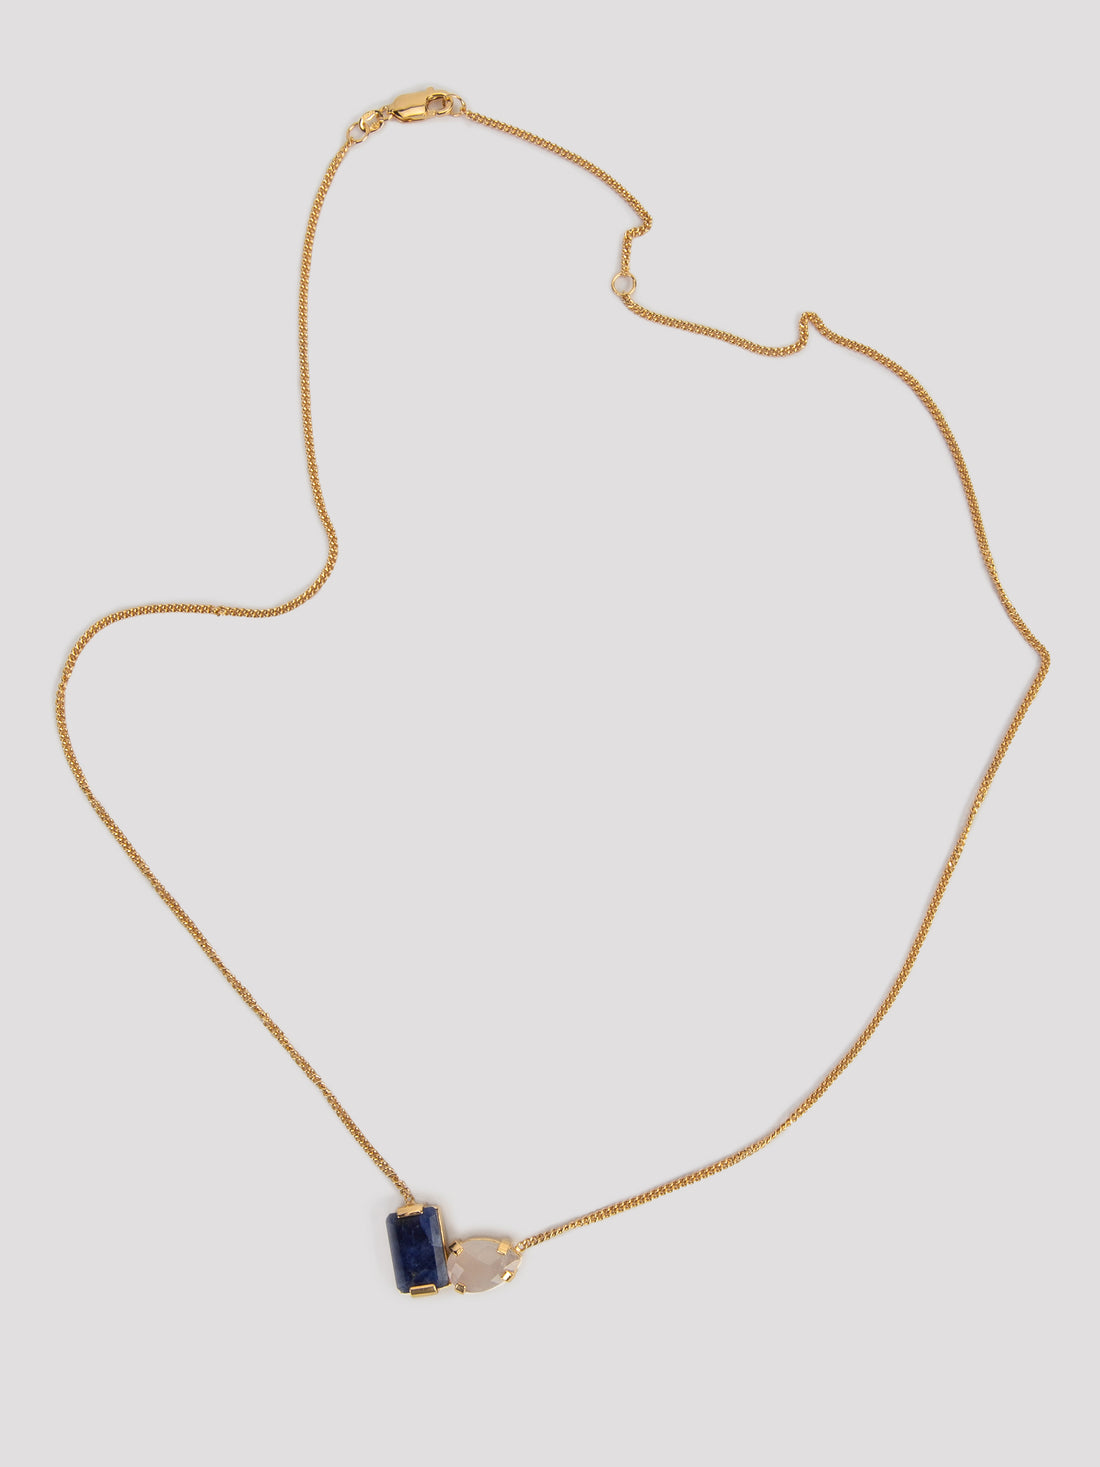 Milestone necklace - Studio Collect